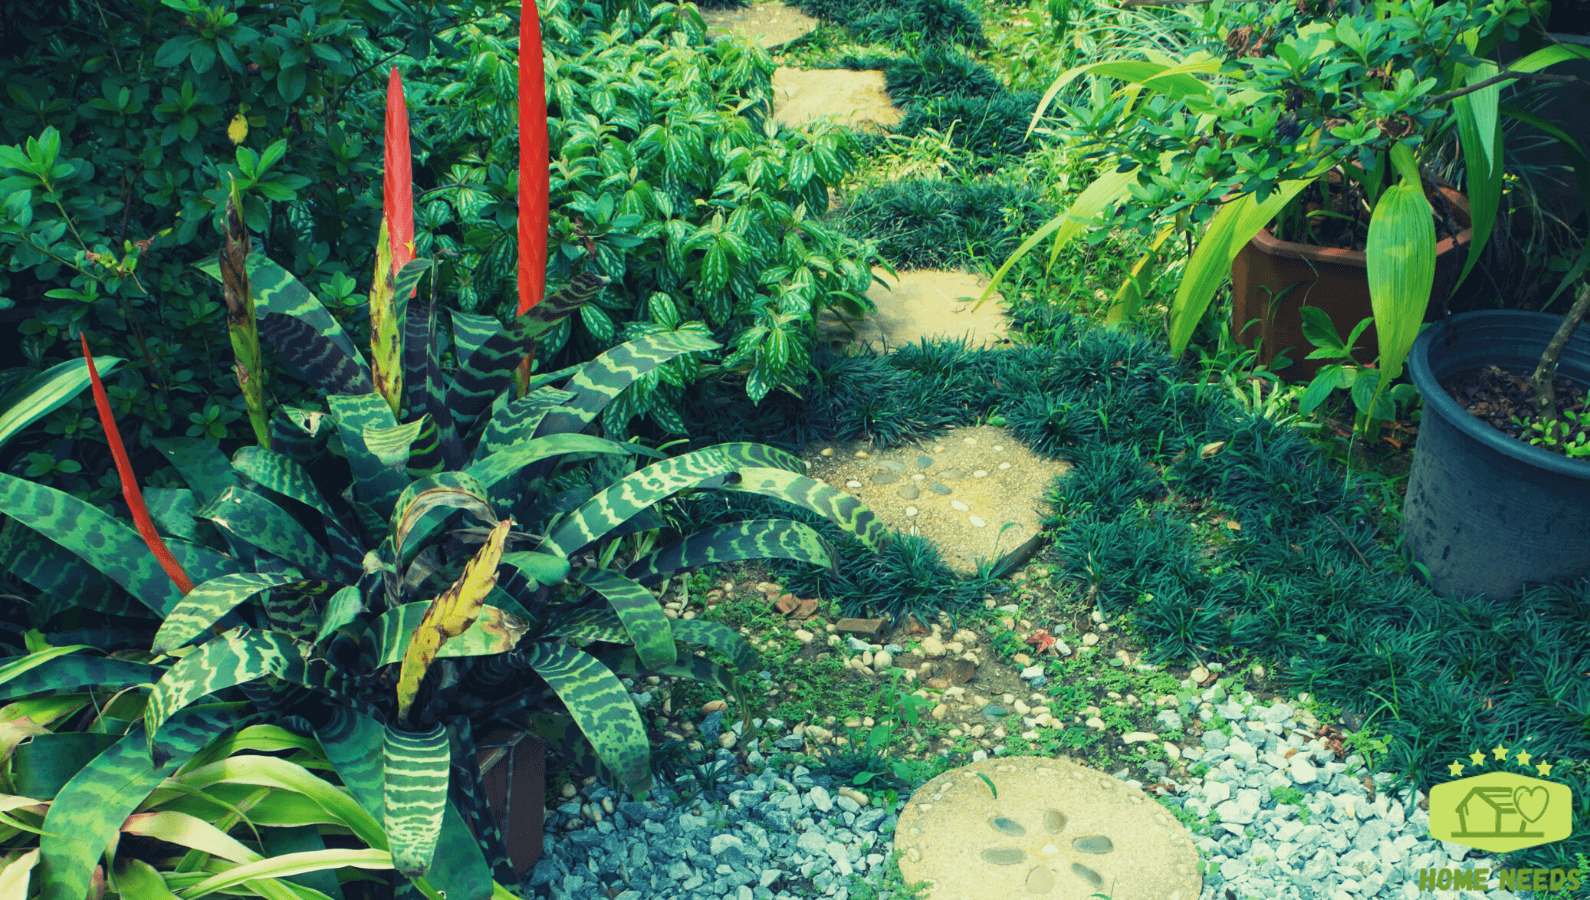 Rock garden with Walkway and Flower Bed